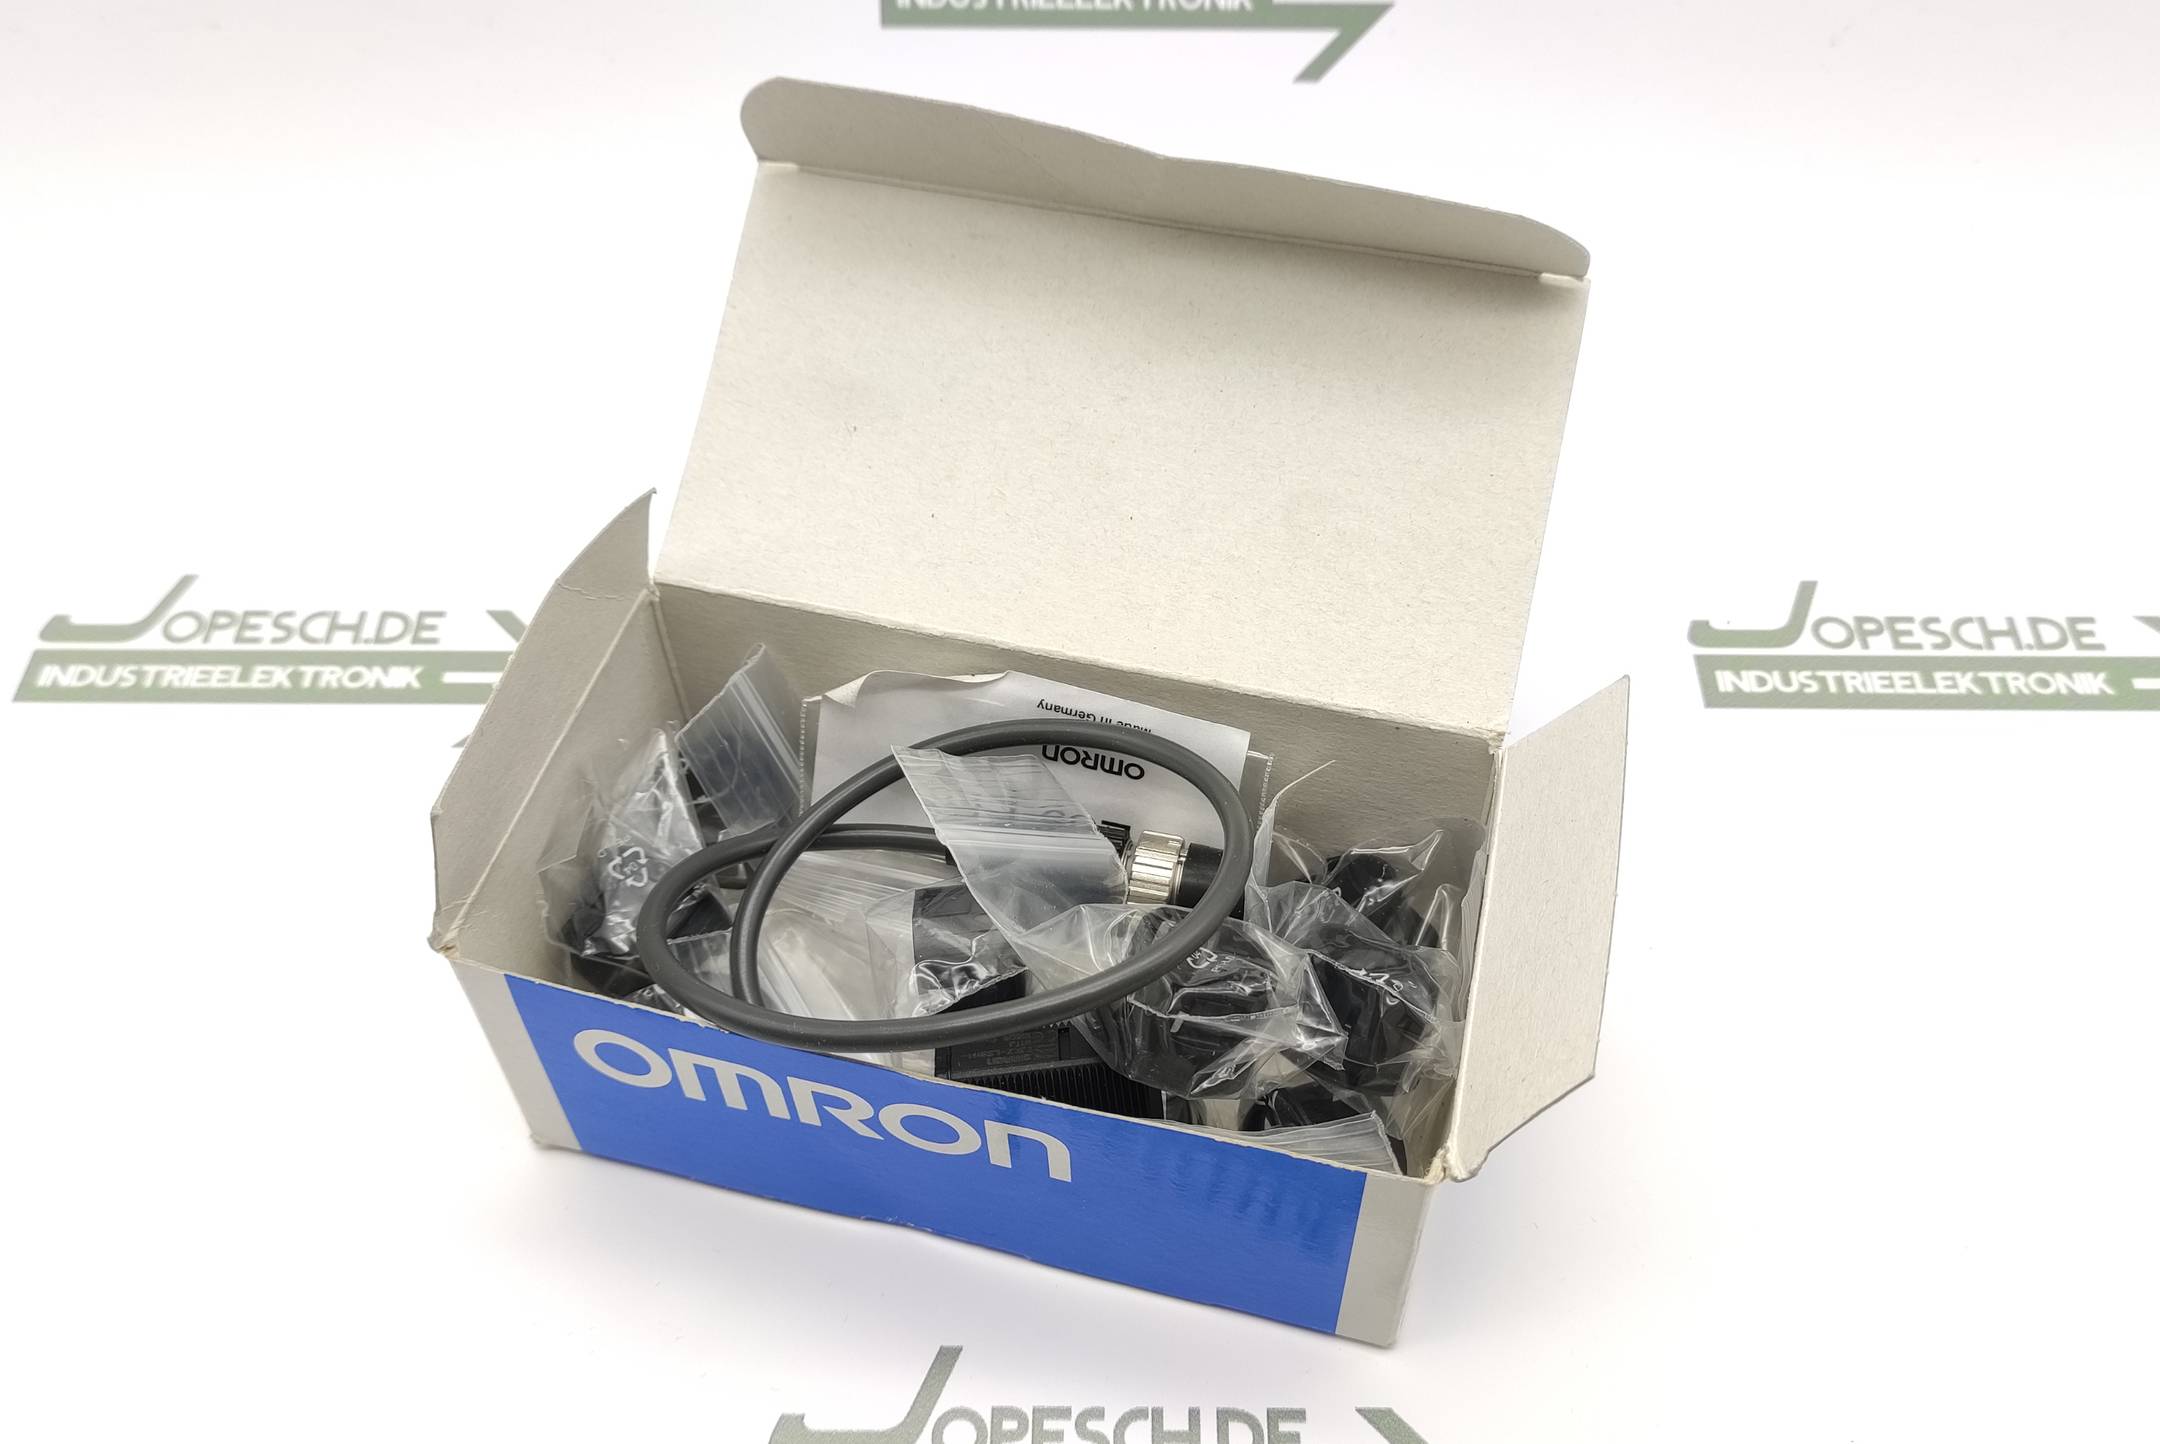 OMRON Fotoelektrisch Sensor 0,3m E3FZ-DEMOPACK-1